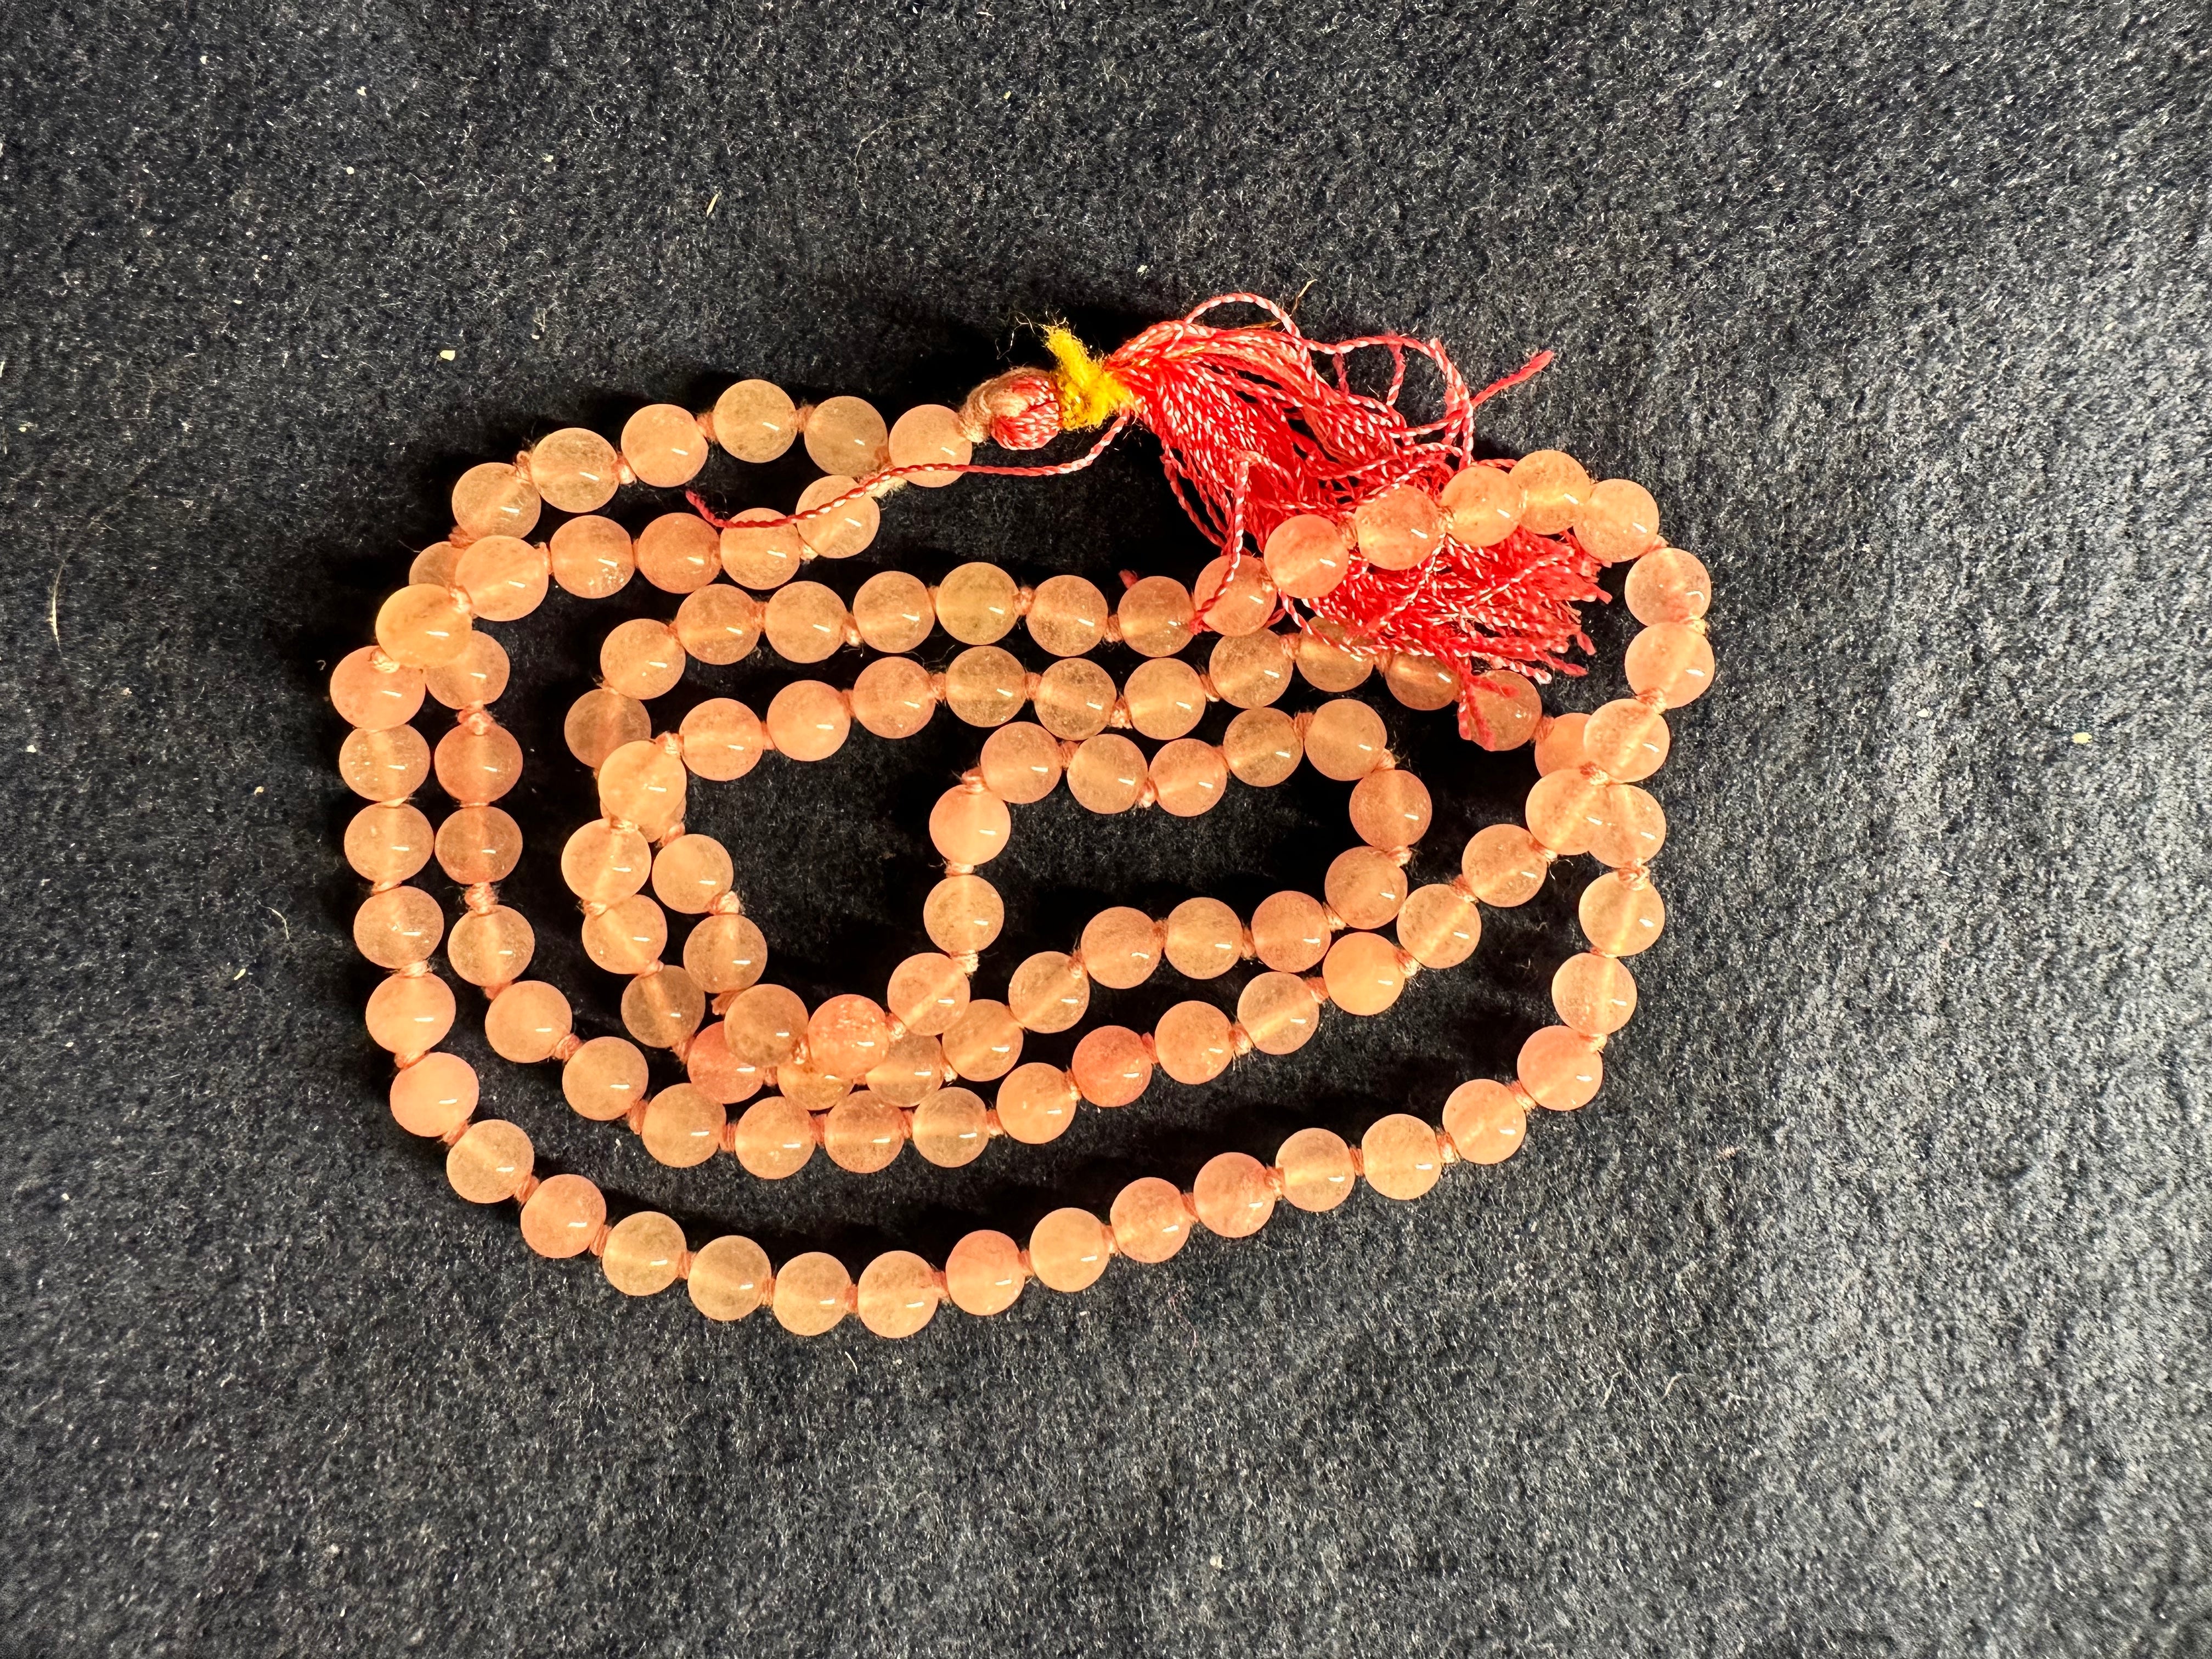 Rose Quartz Mala Prayer Beads